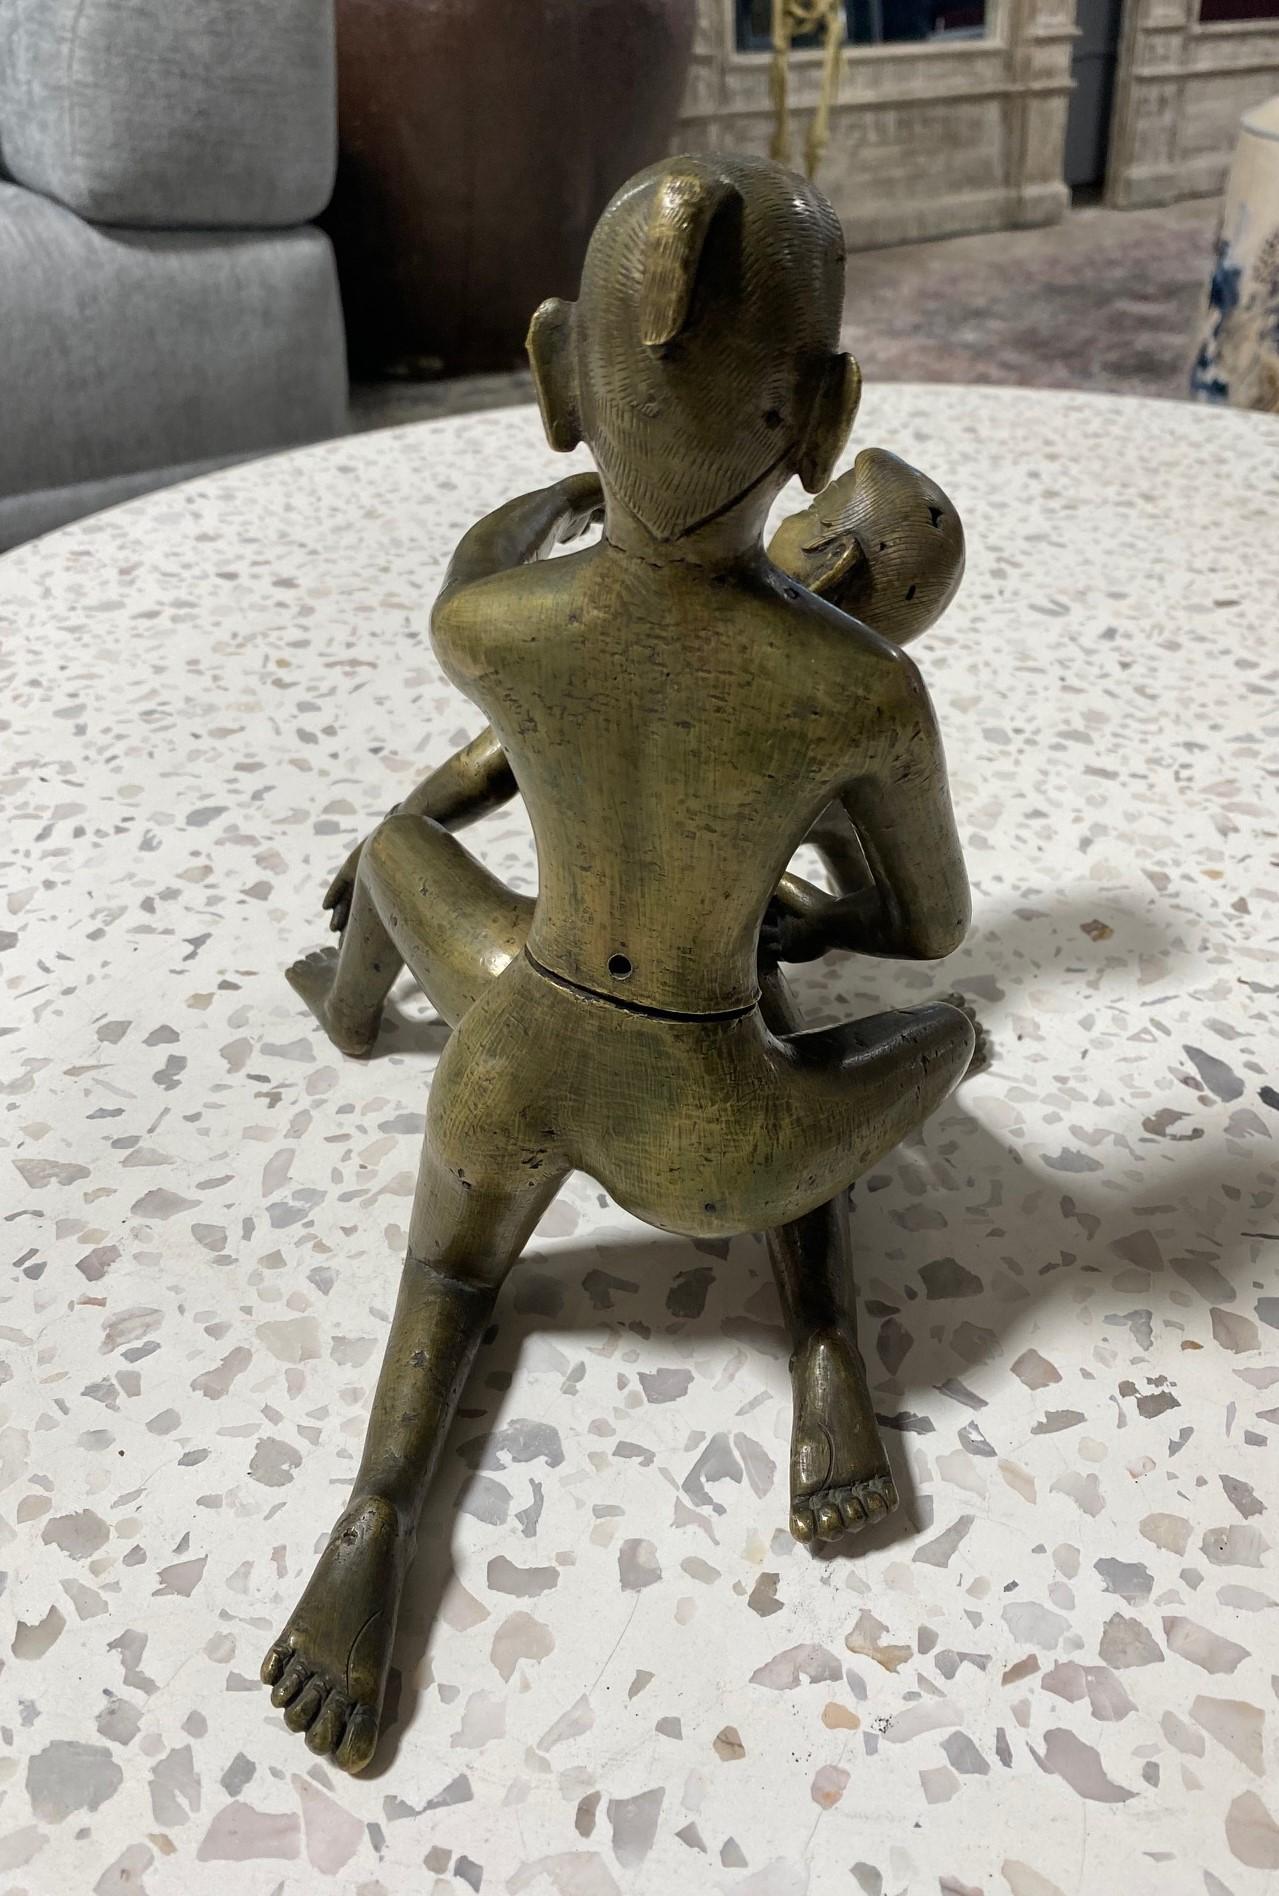 Skulptur Kama Sutra-Figuren aus schwerer Bronze, Indien, Südostasiatisch, erotisch, Kama Sutra im Angebot 12